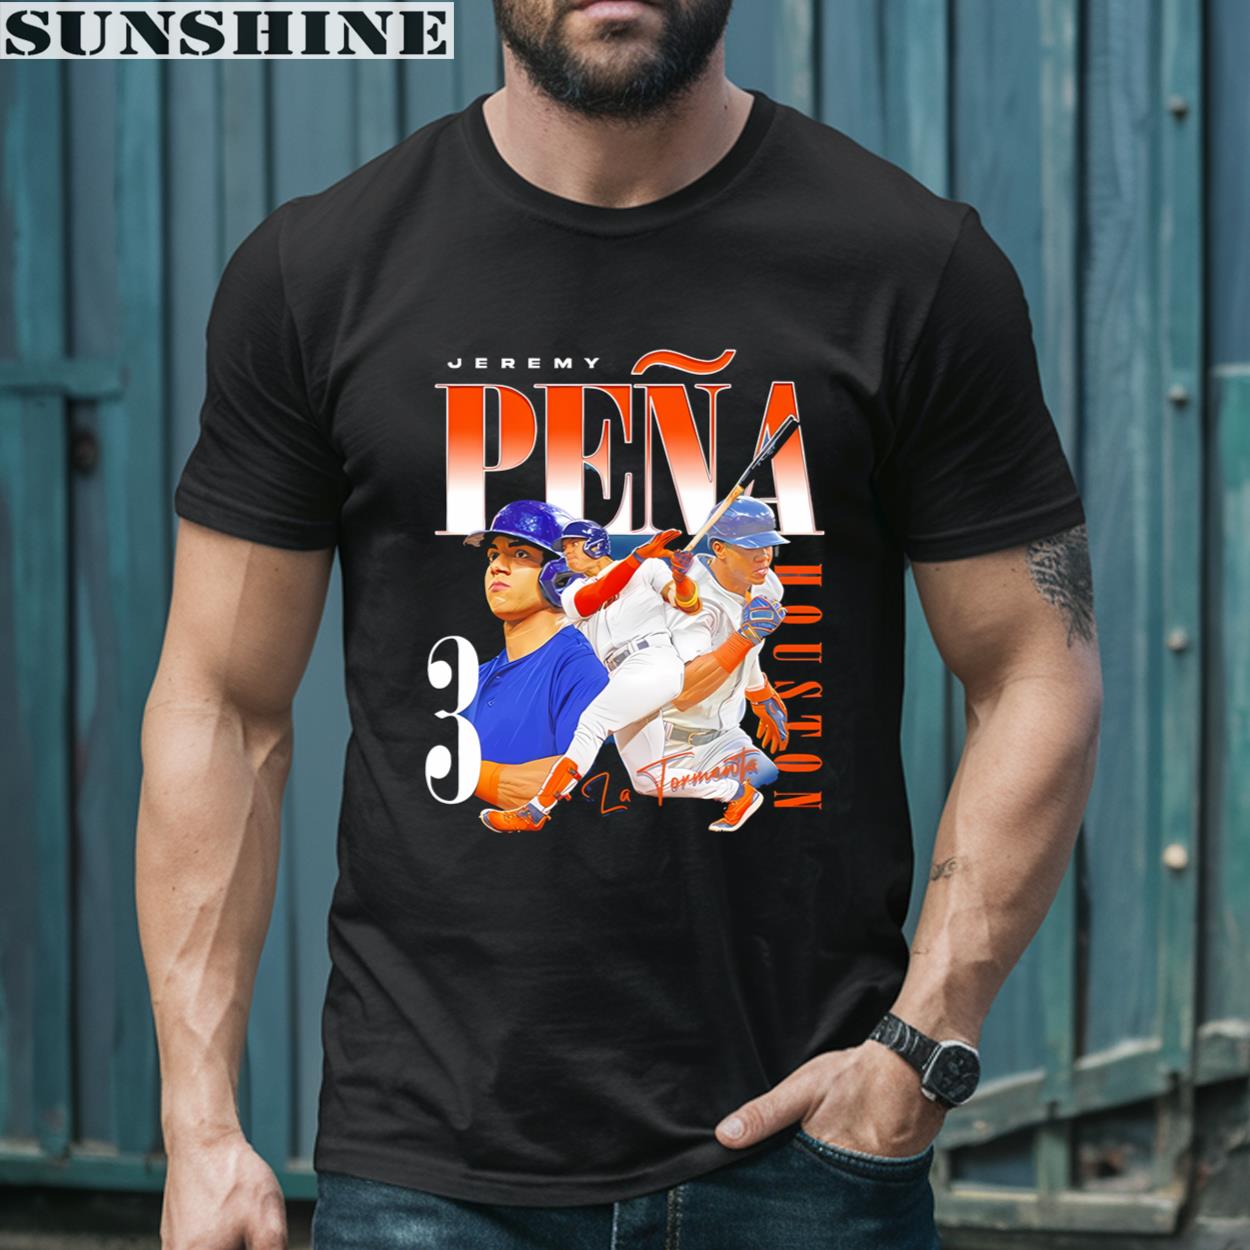 Jeremy Pena Player Signature Graphic Tee Houston Astros Shirt - mechsunshine